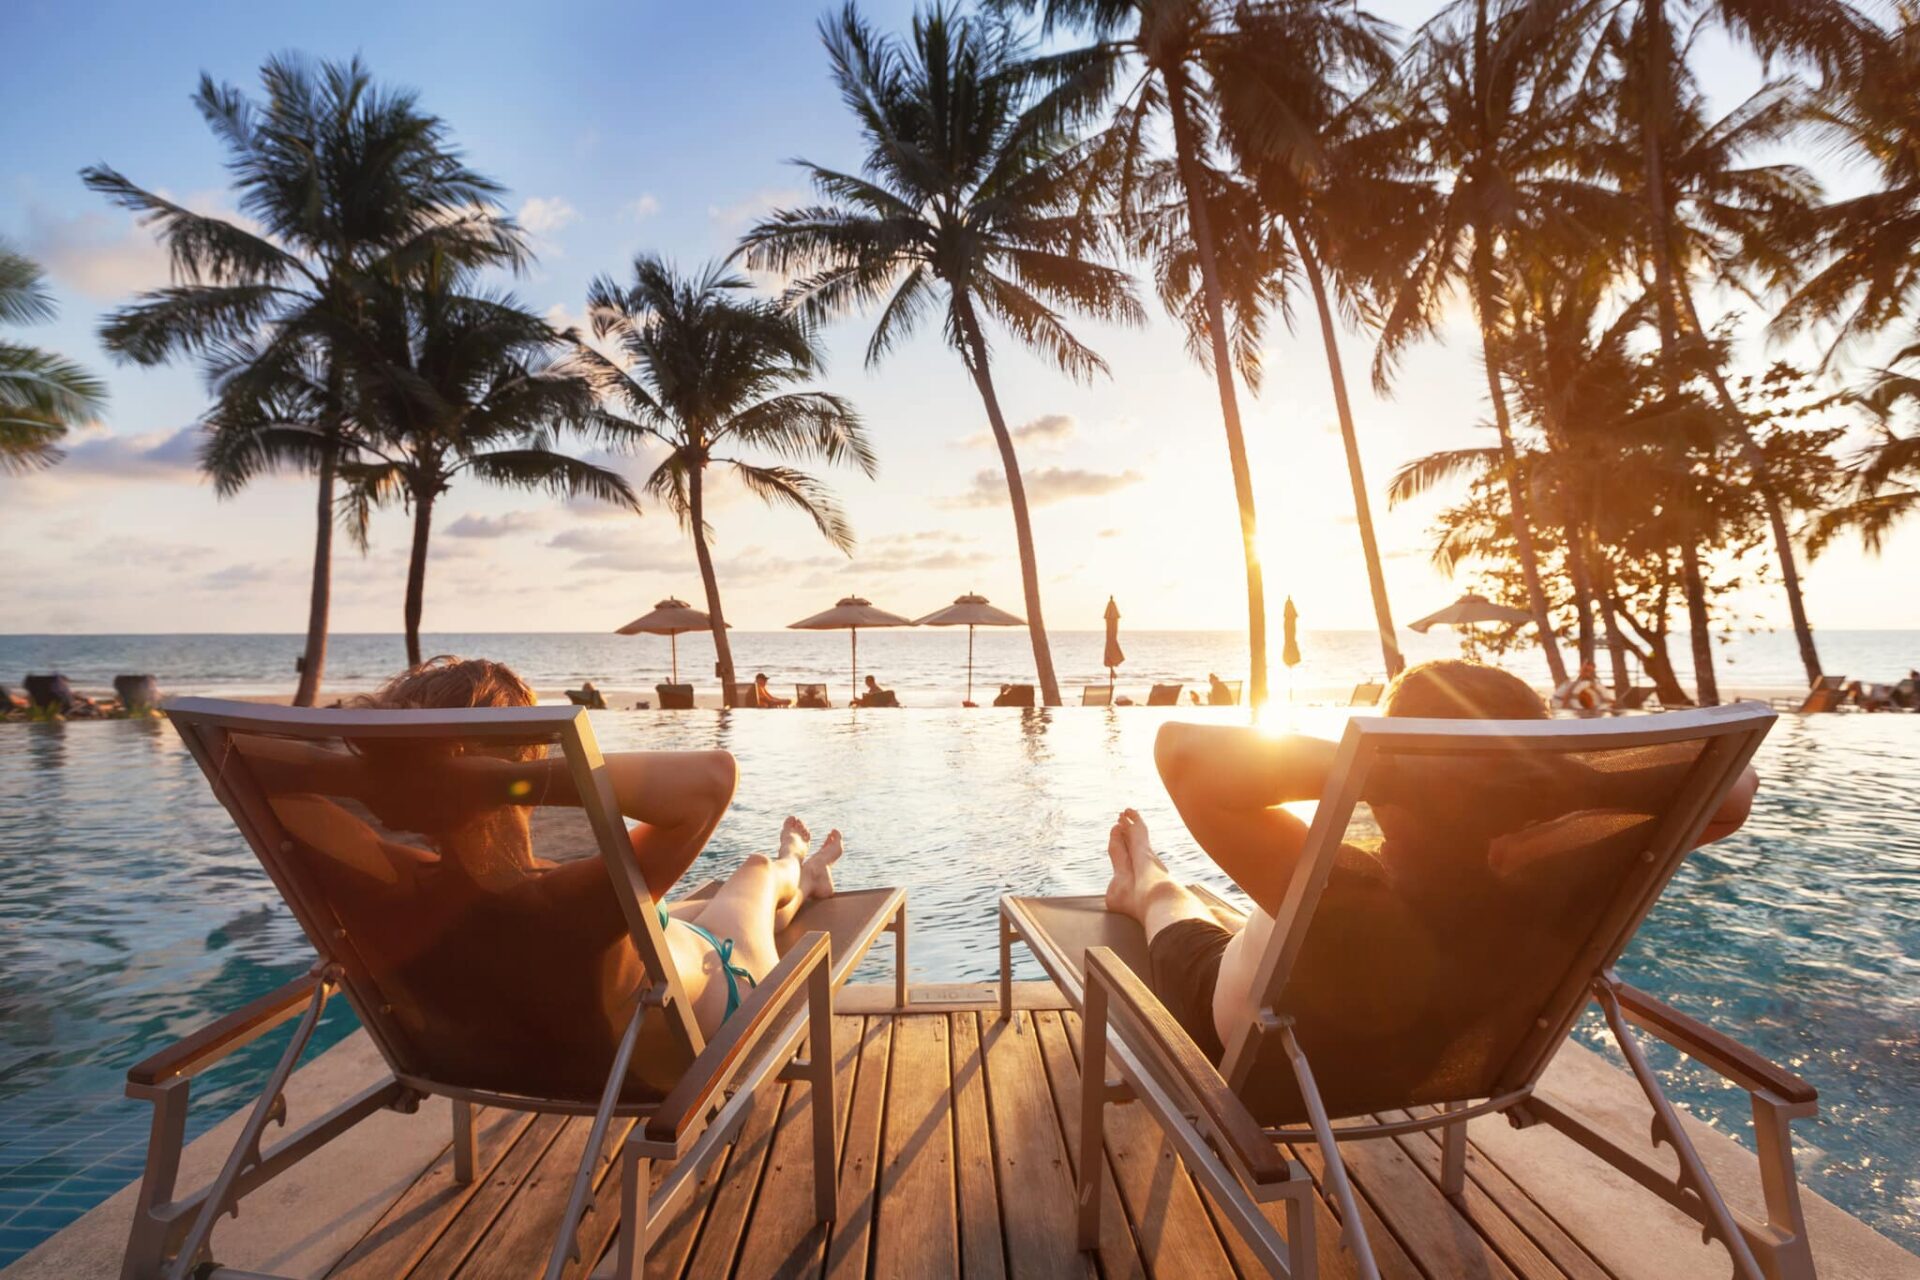 luxury travel, romantic beach getaway holidays for honeymoon cou